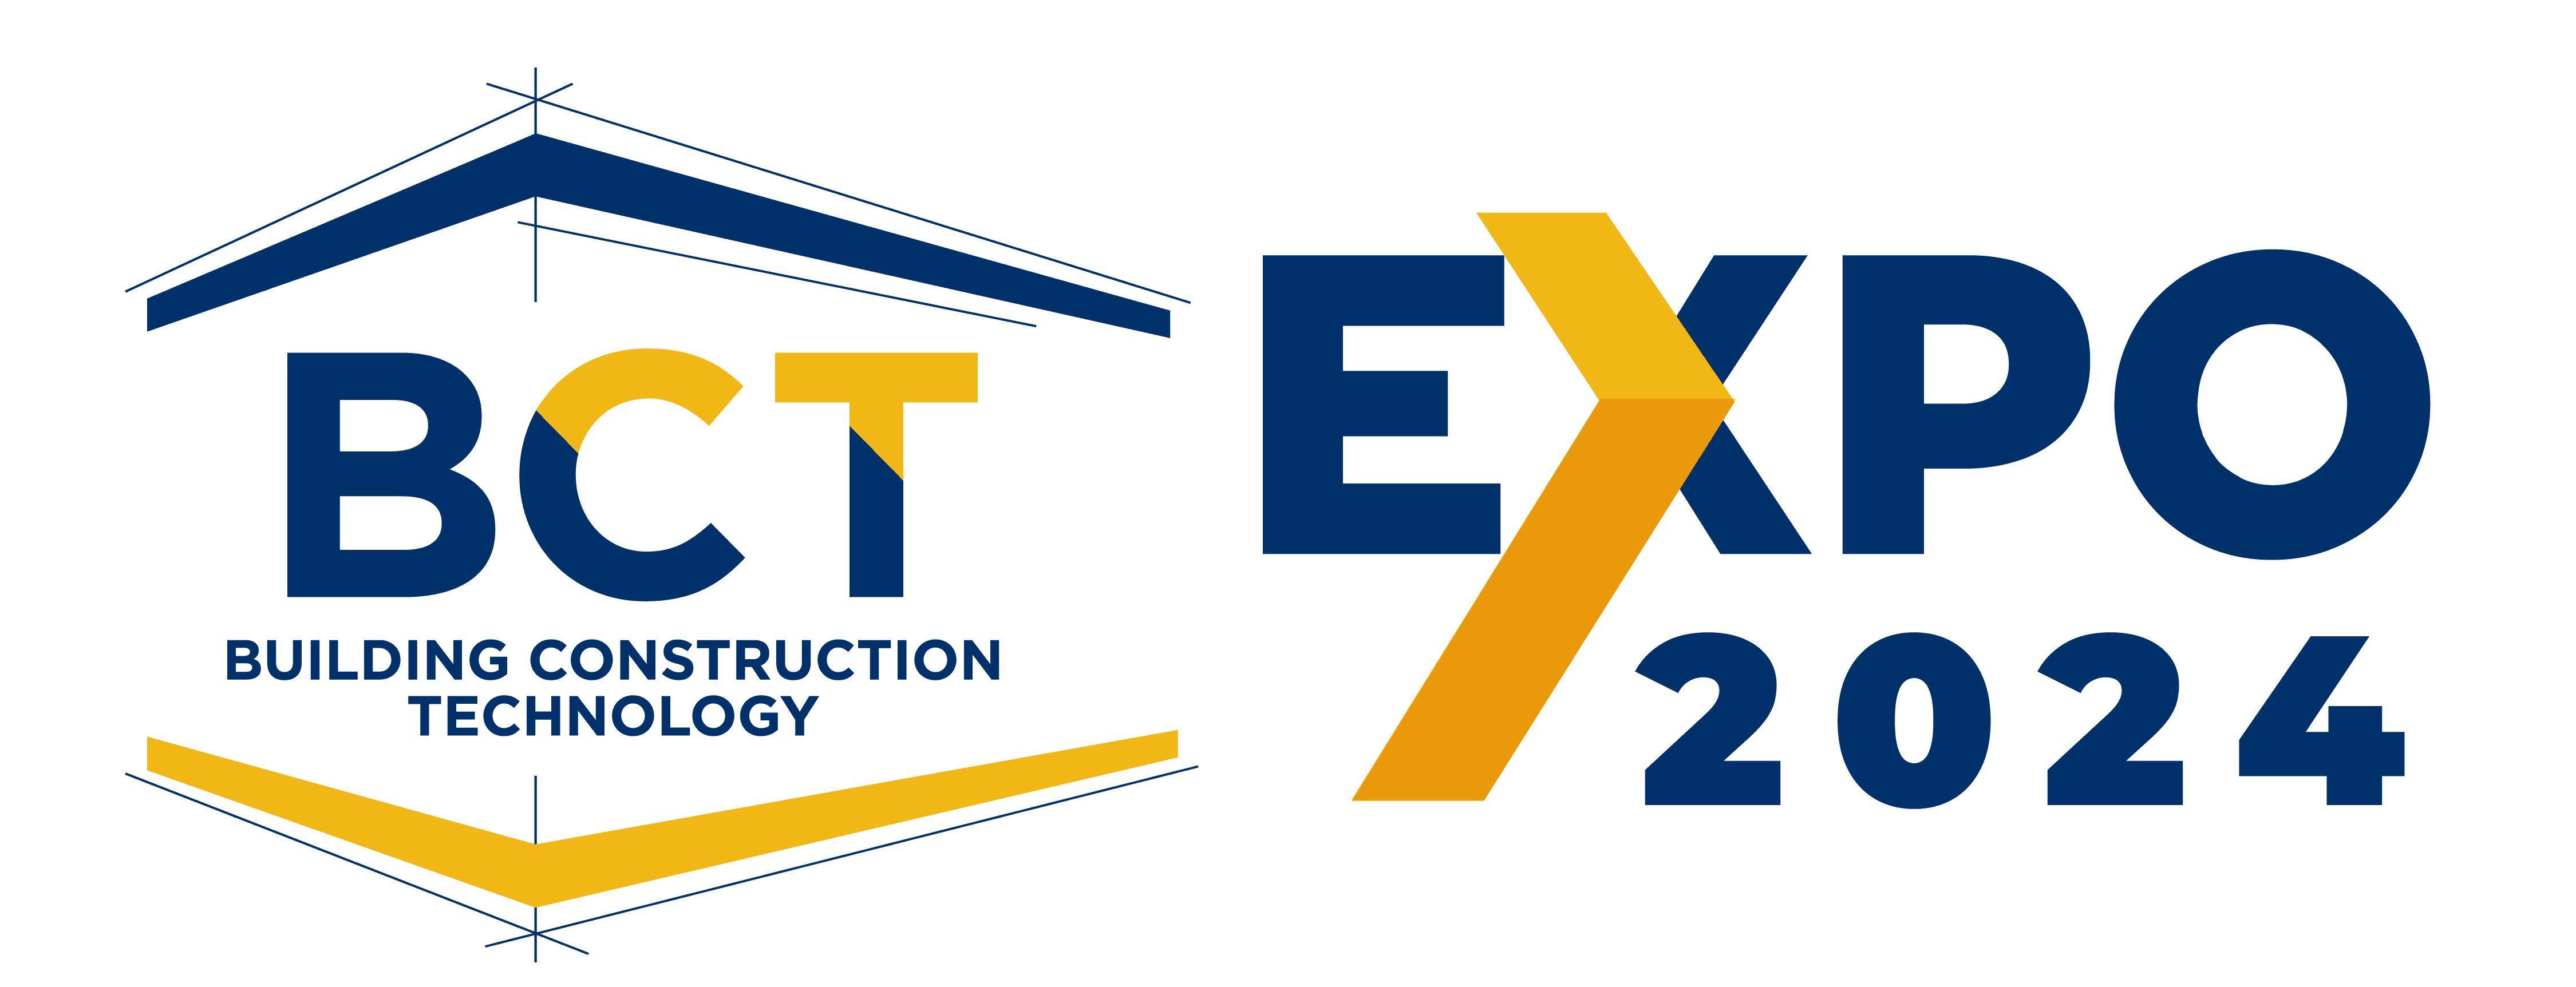 Logo of Building Construction Technology Expo 2024